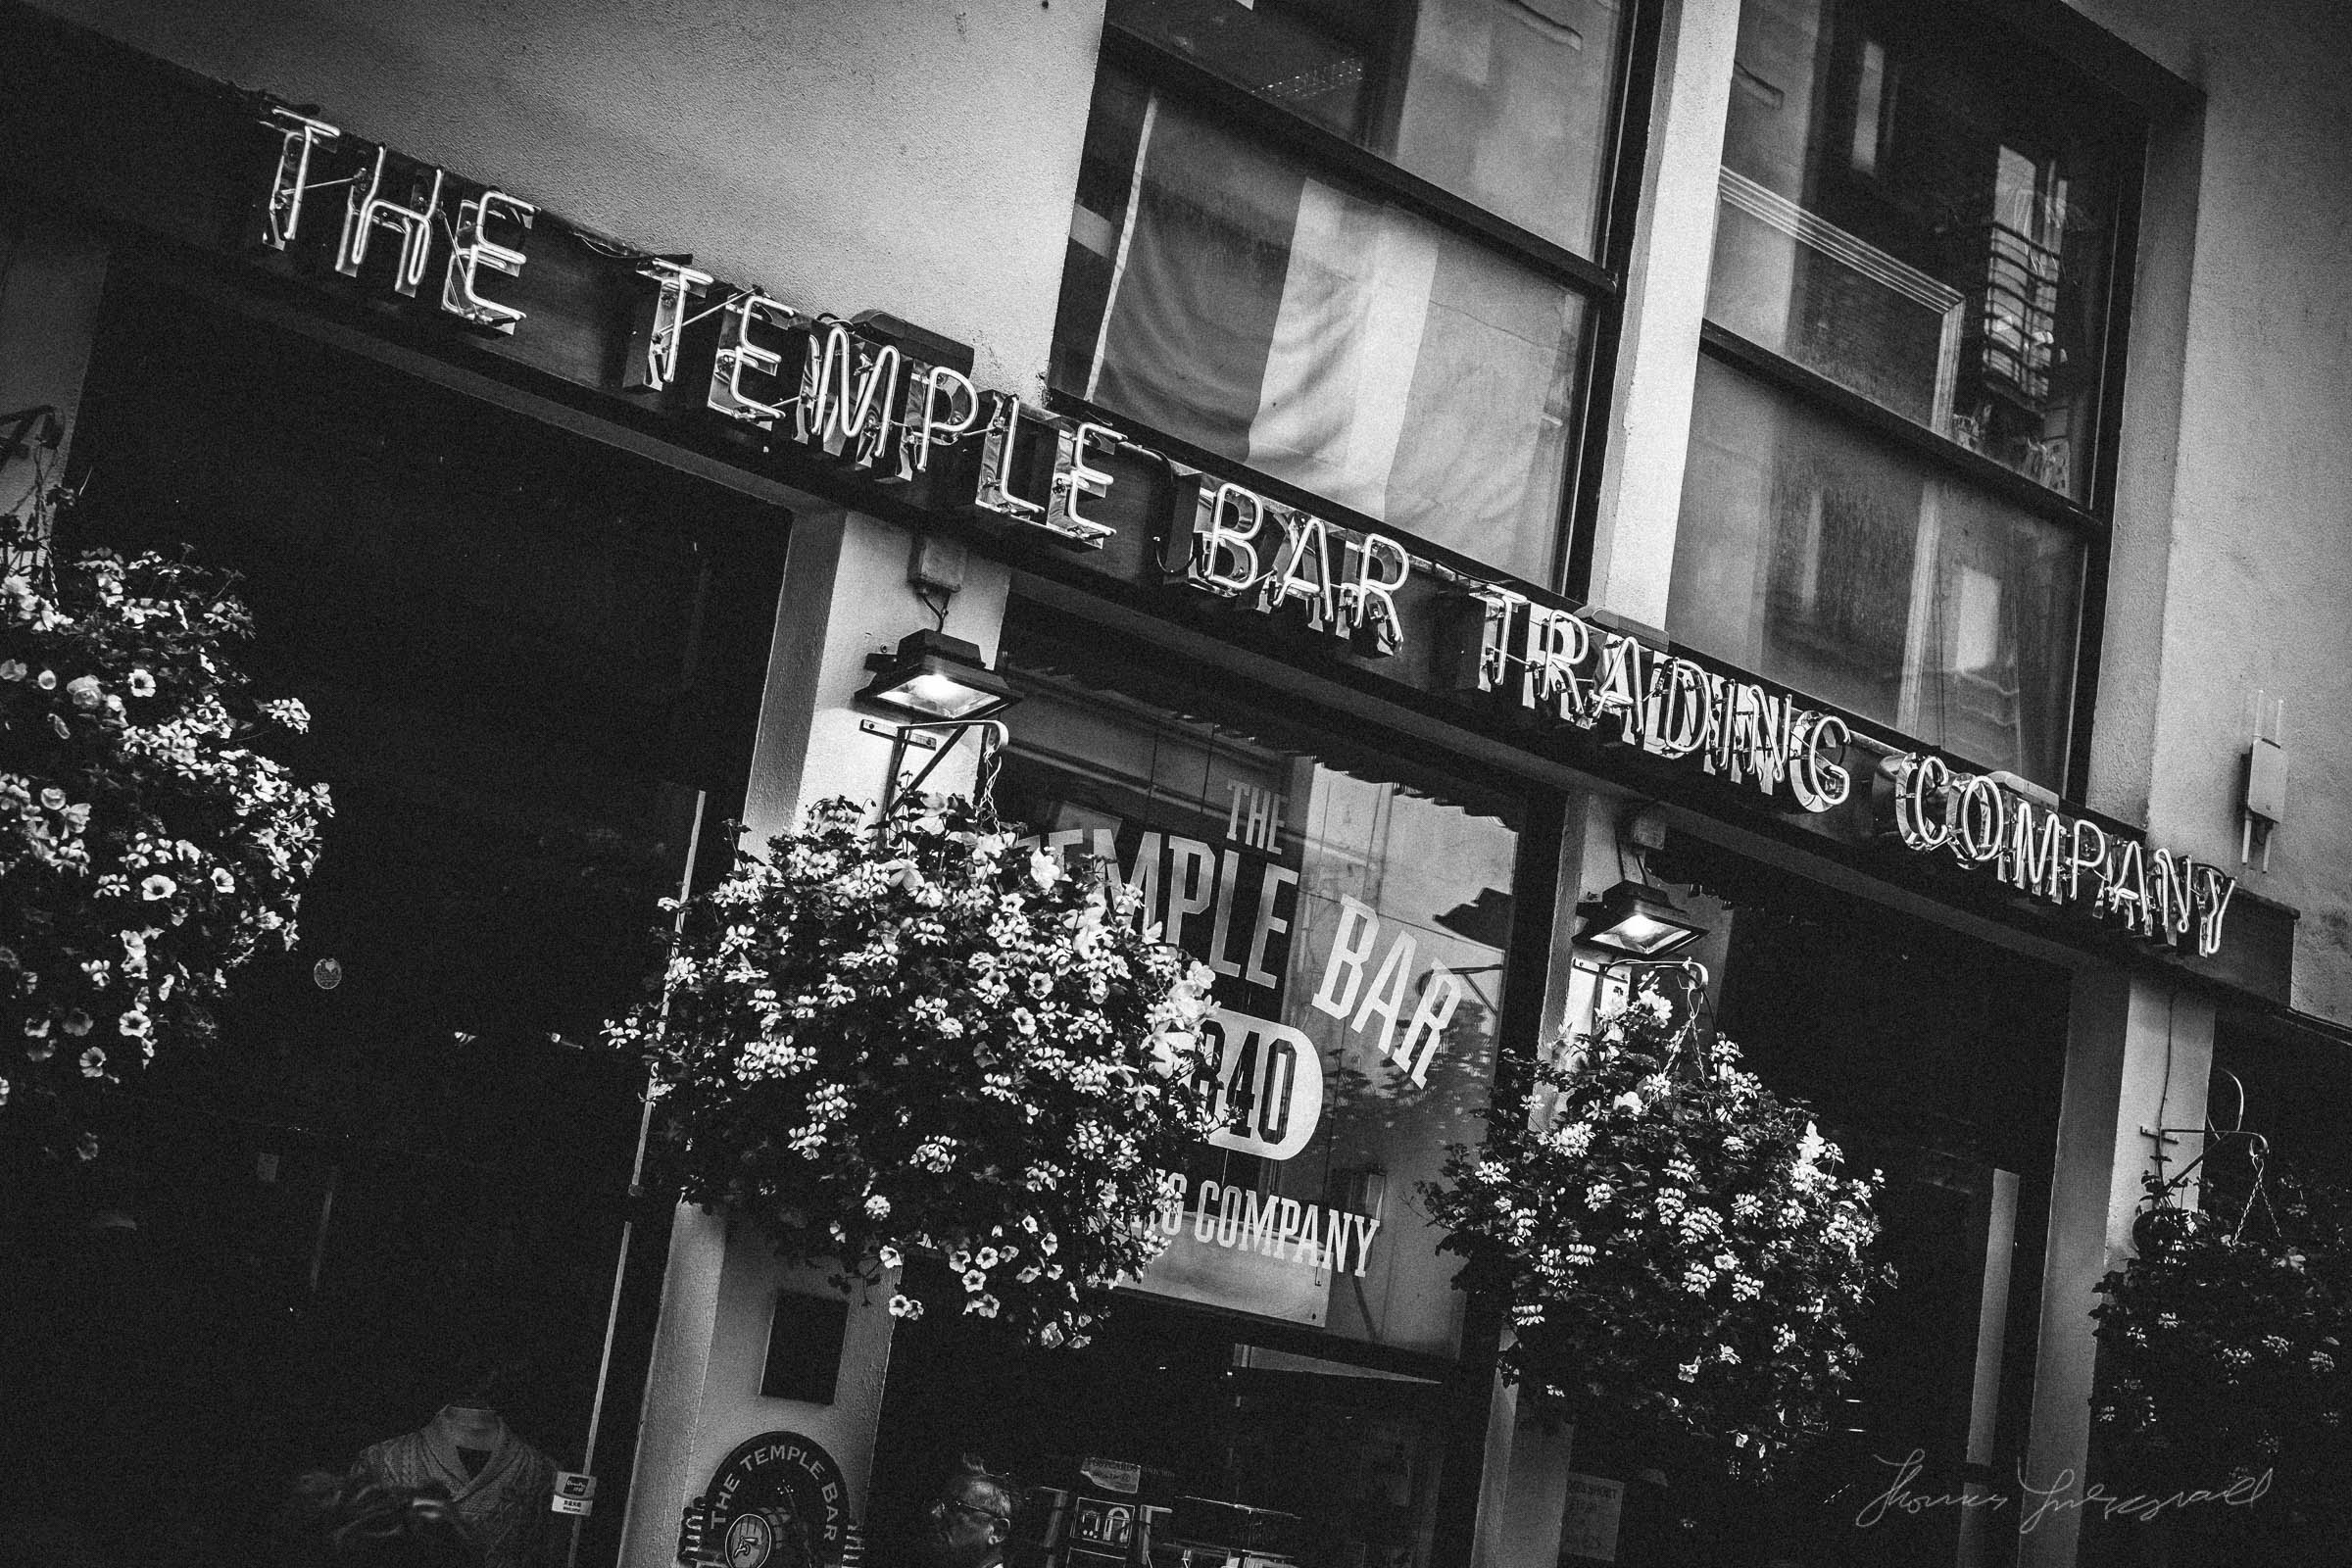 The Temple Bar Trading Company